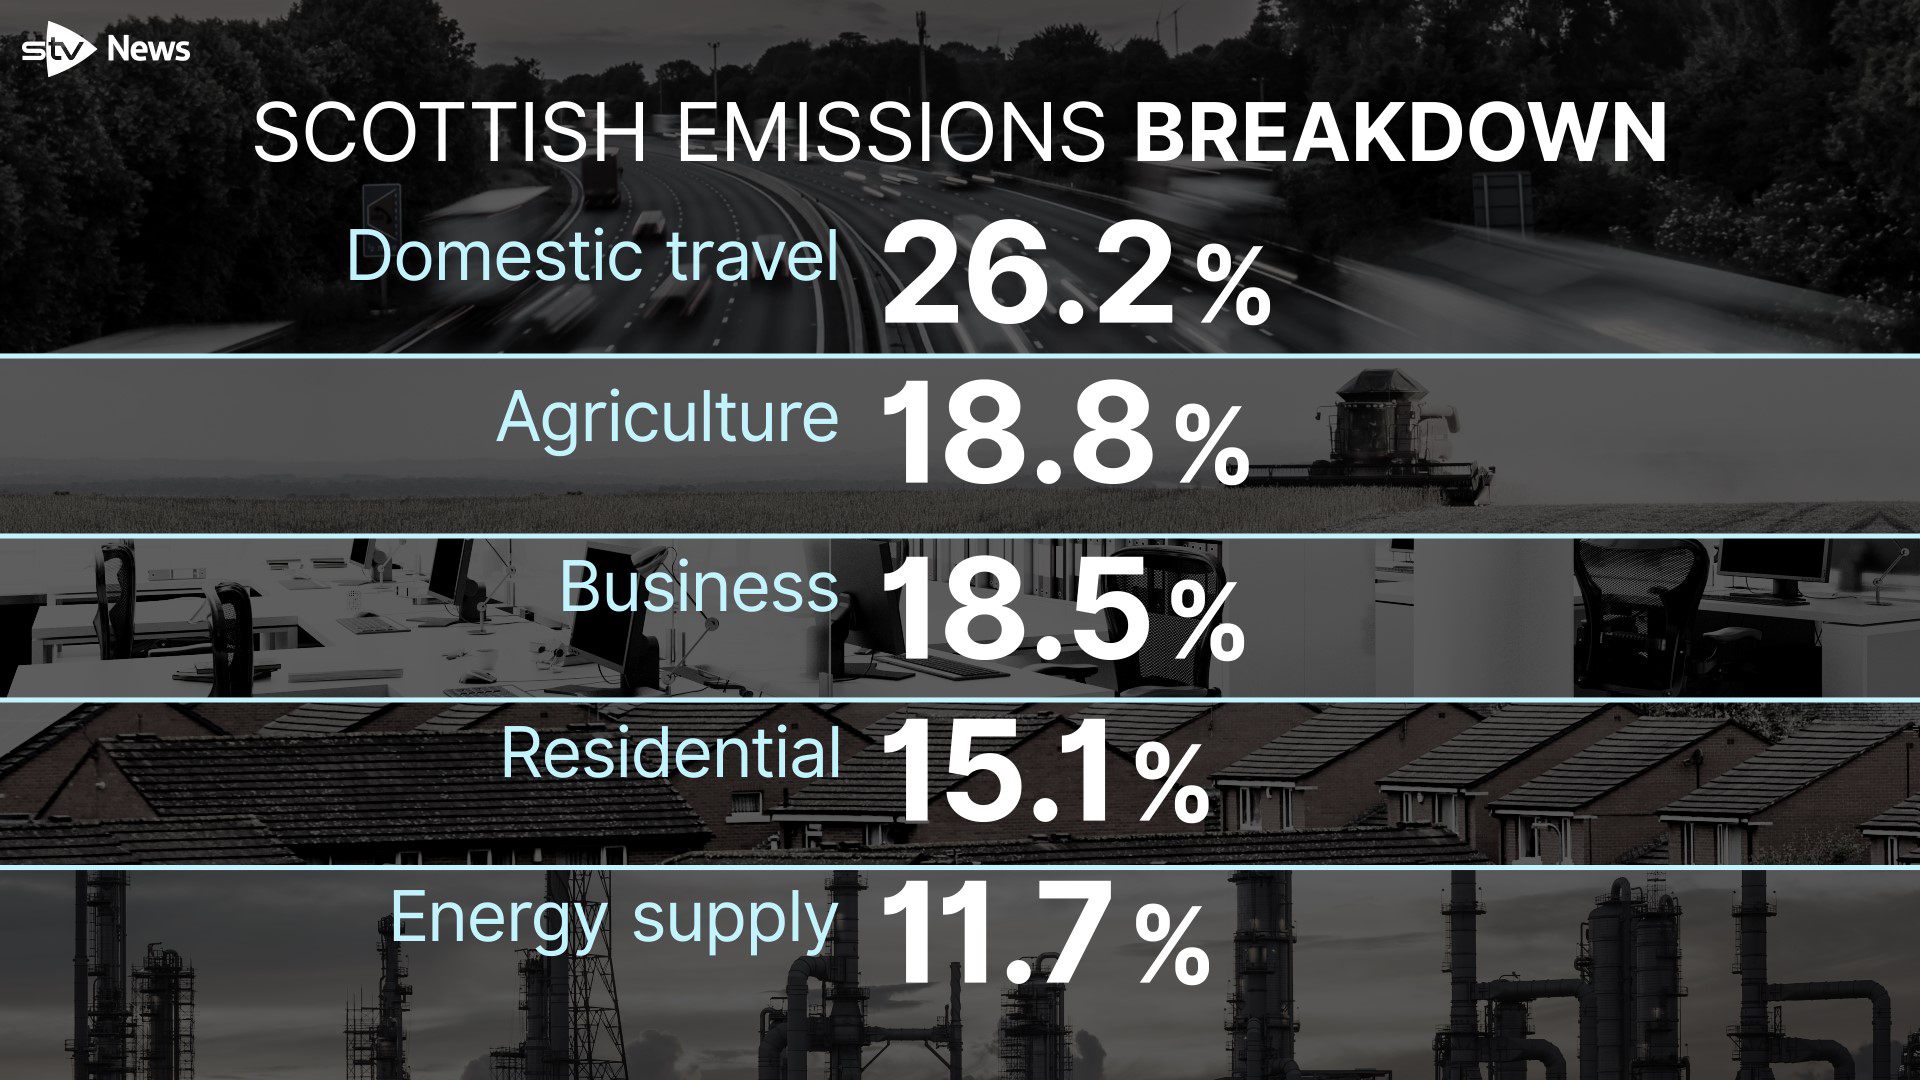 Scotland's emissions breakdown 